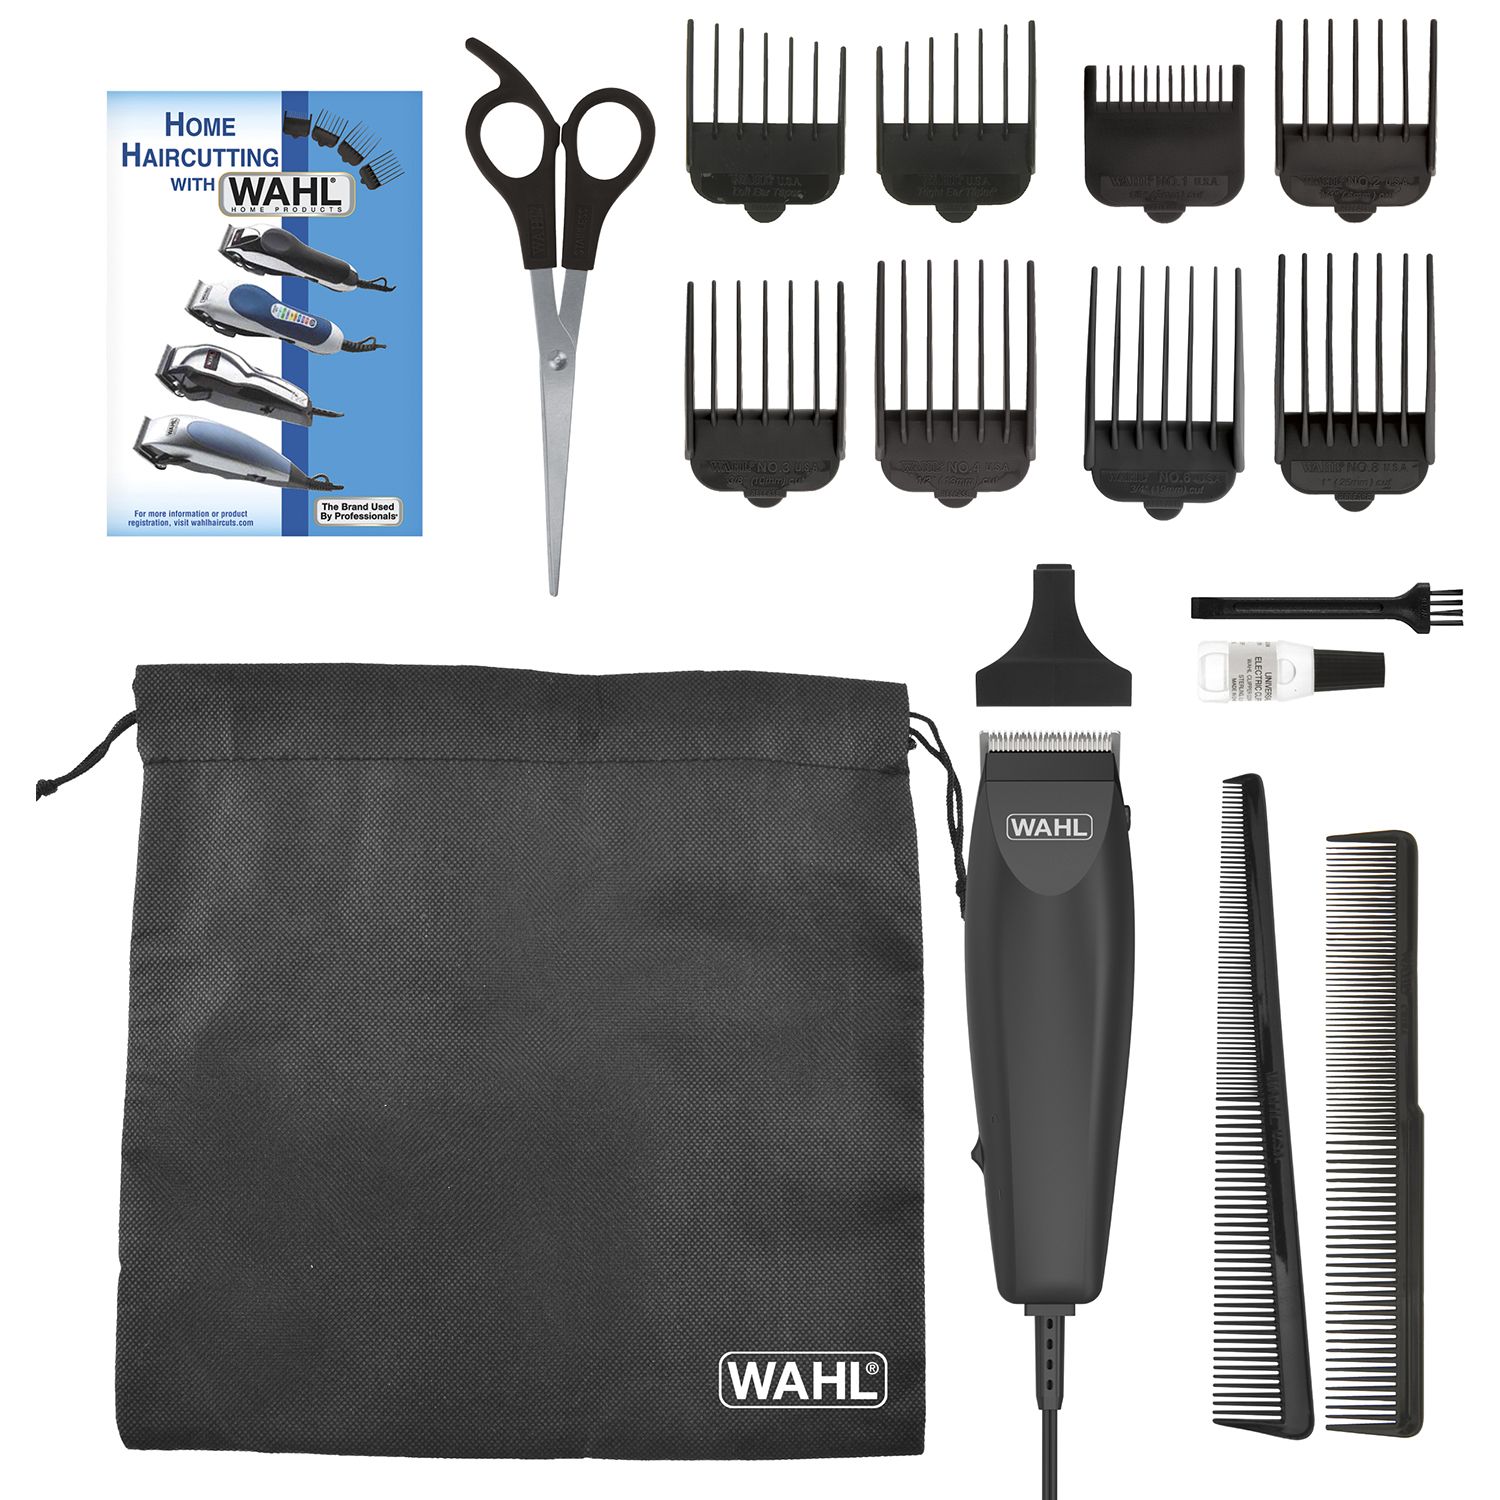 Home Haircutting Kit